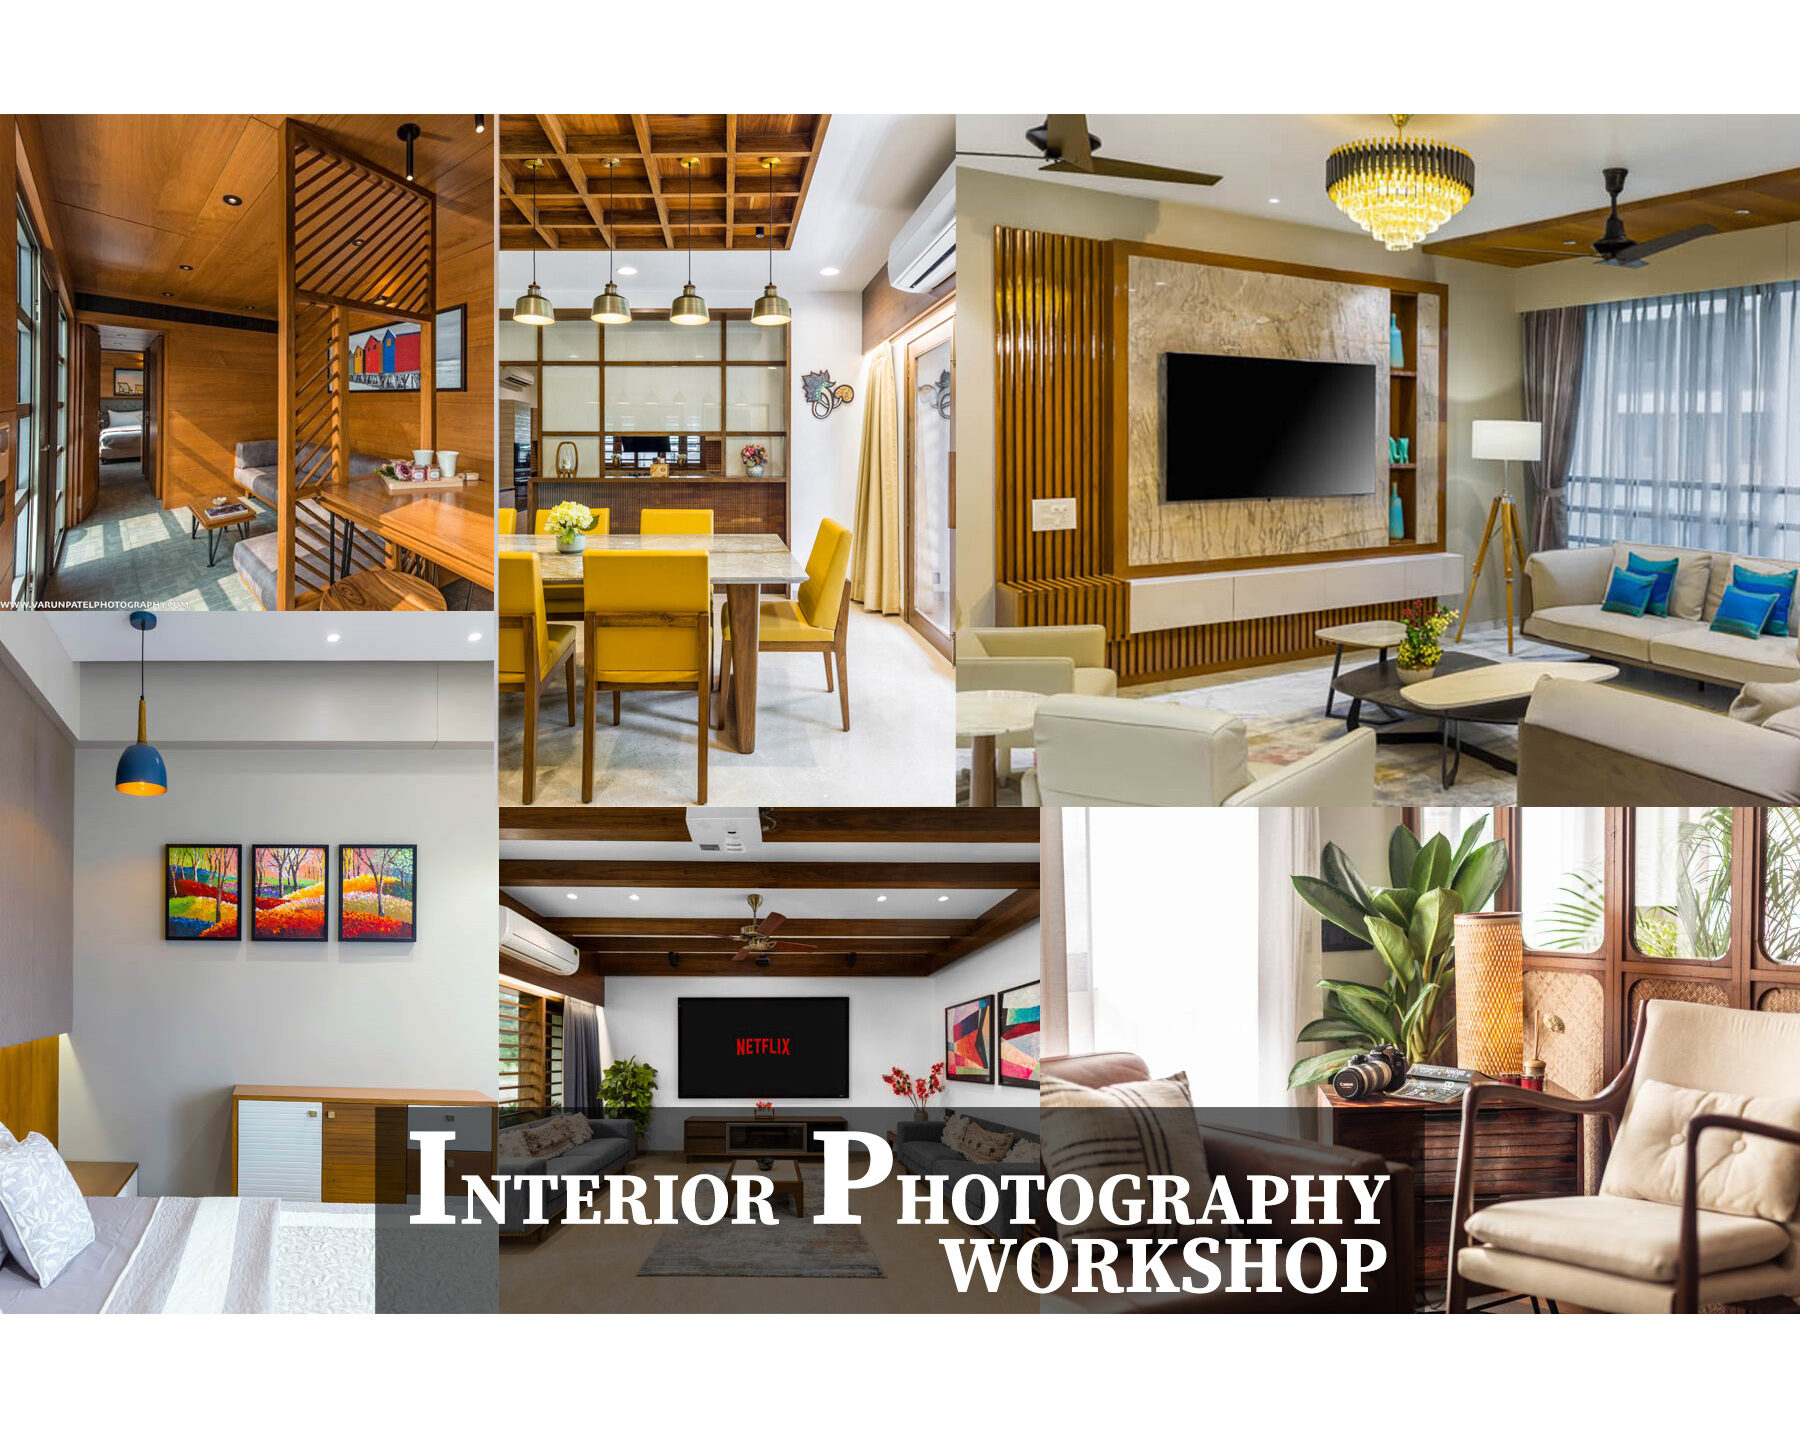 Interior photography workshop